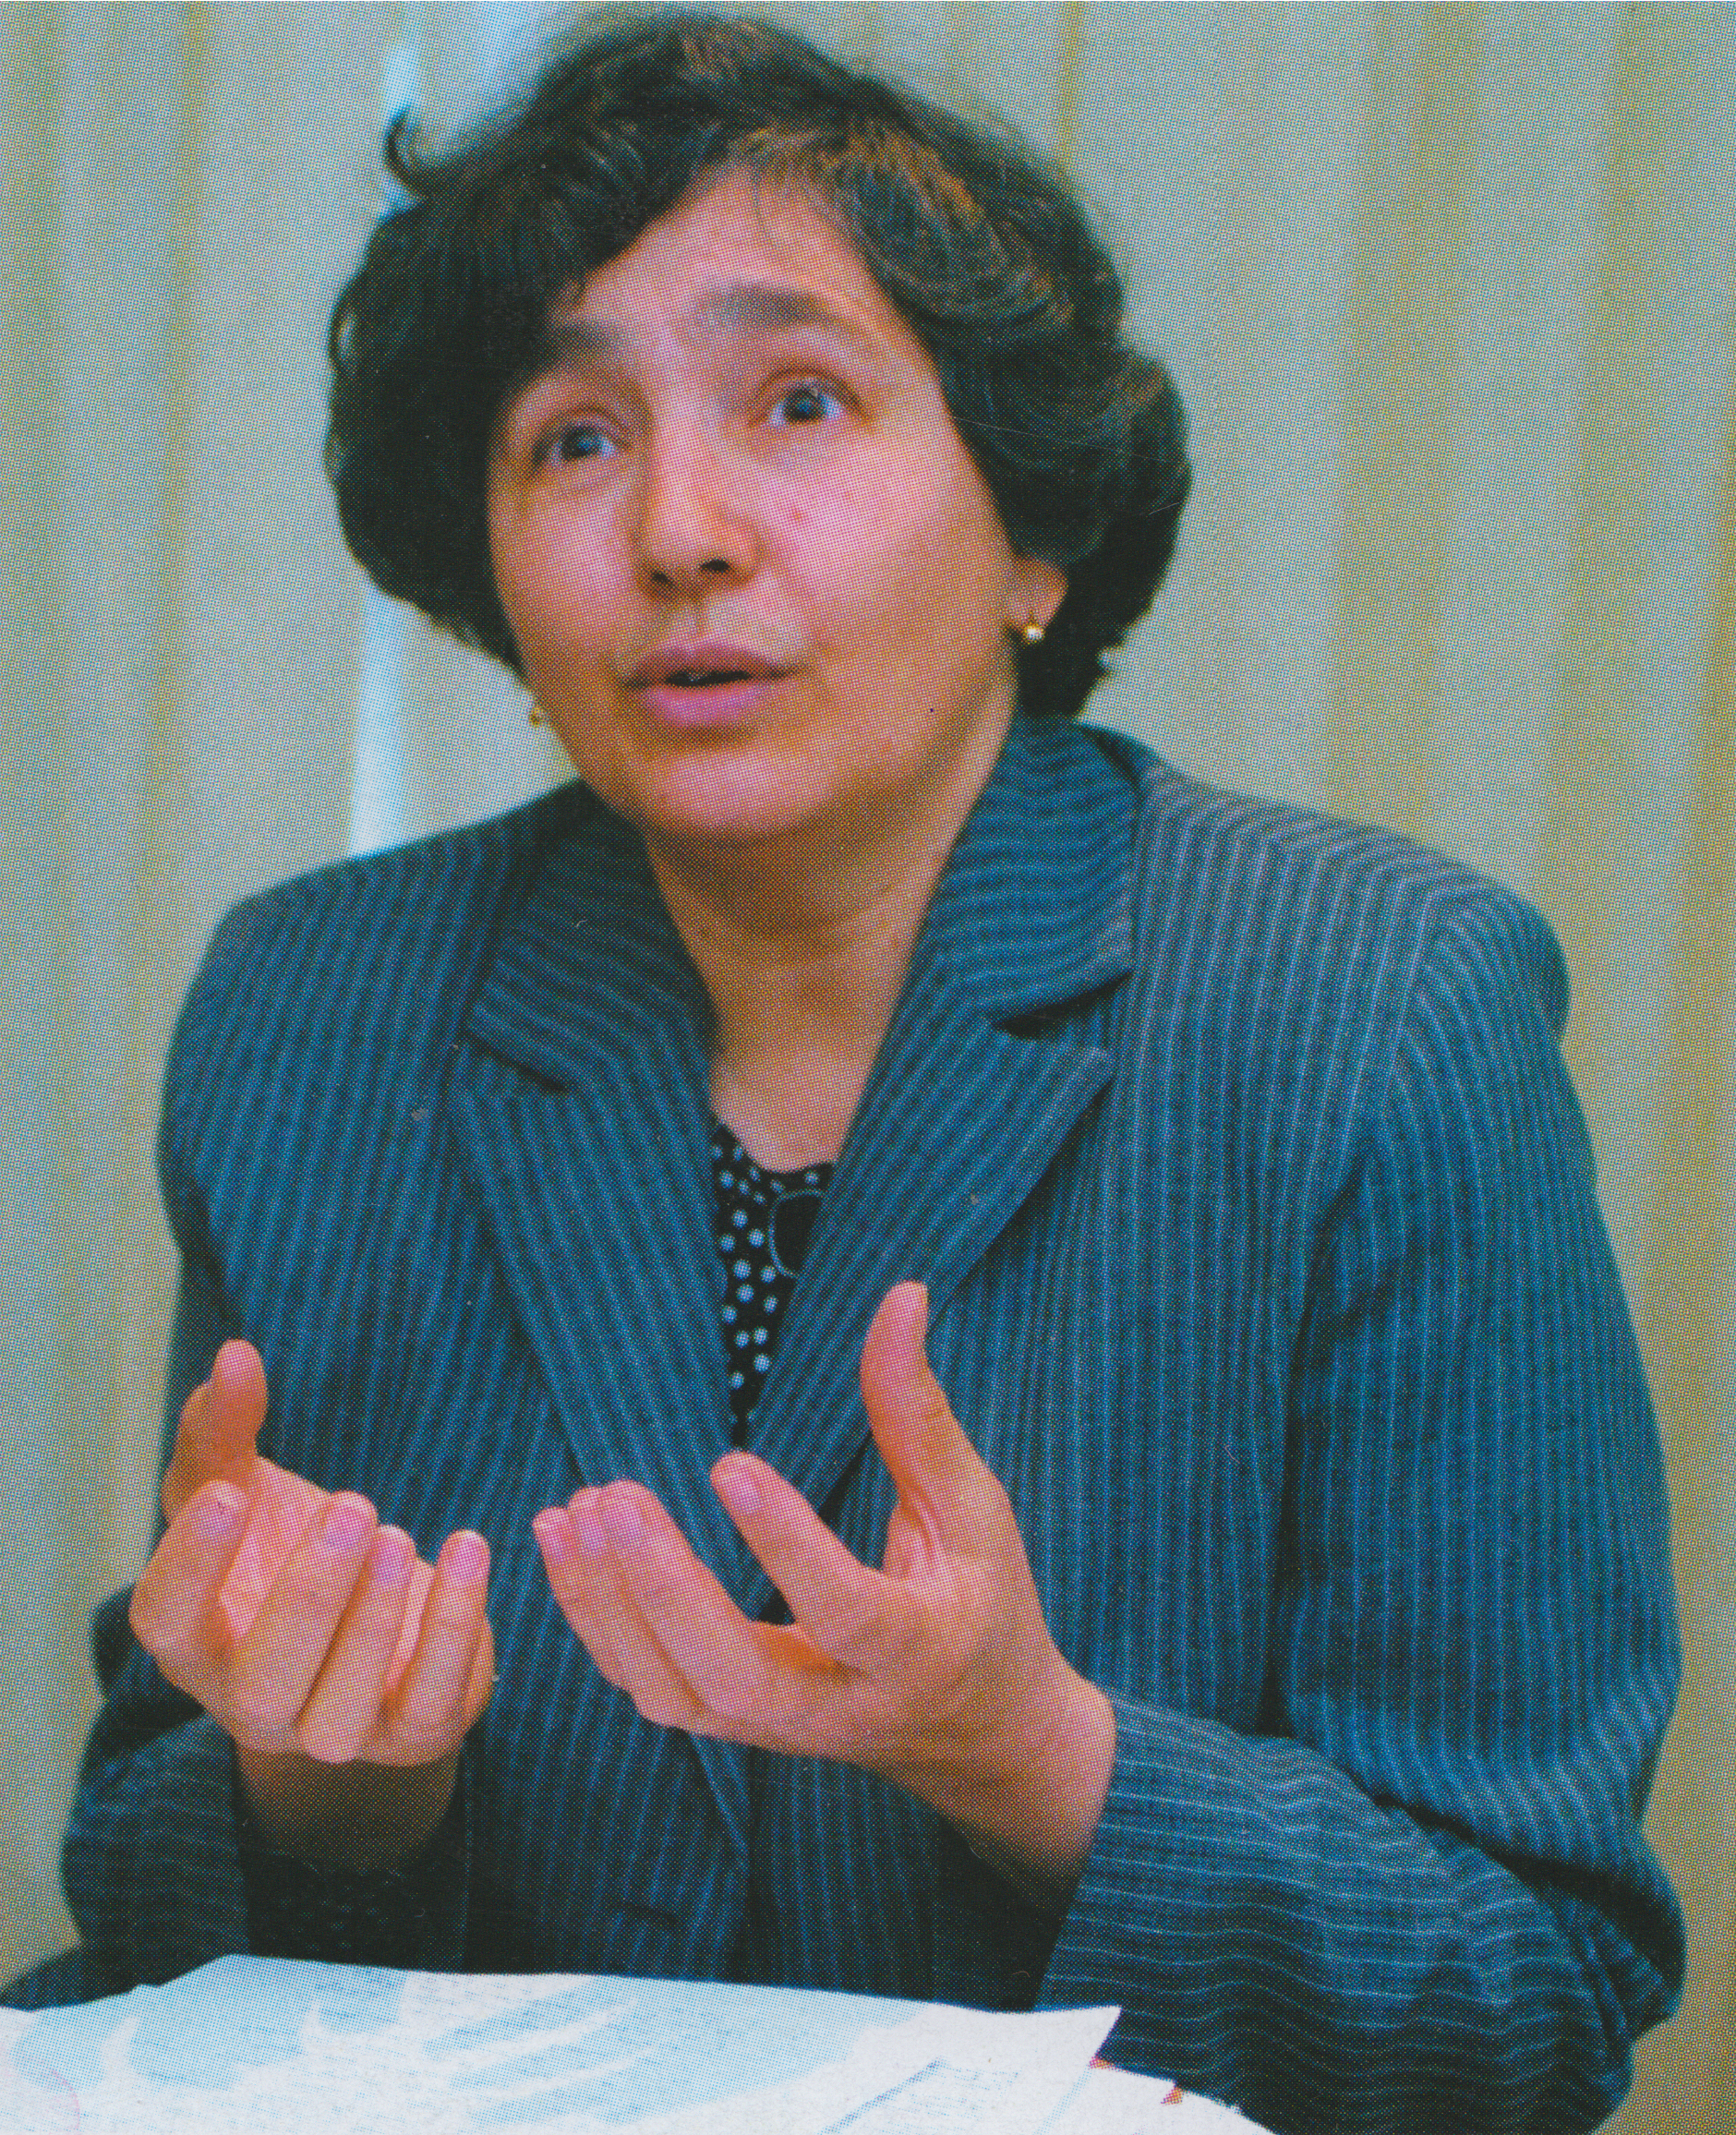 Poet Elena Liliana Popescu